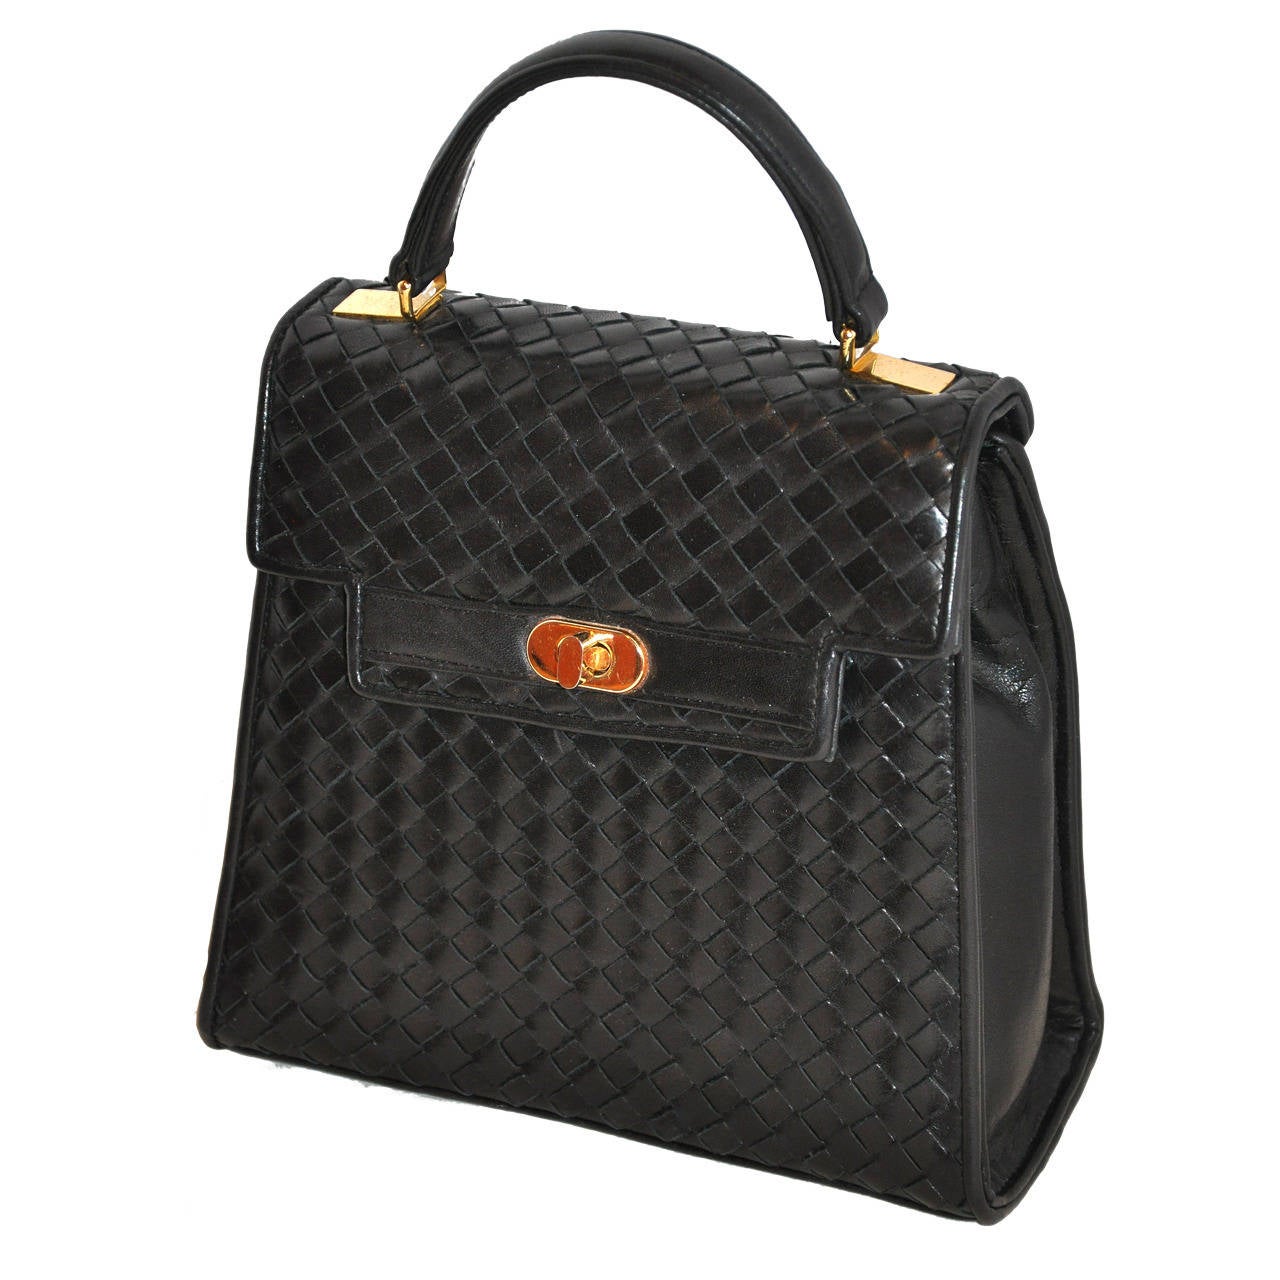 Saks Fifth Avenue Black Lambskin Woven Leather Handbag For Sale